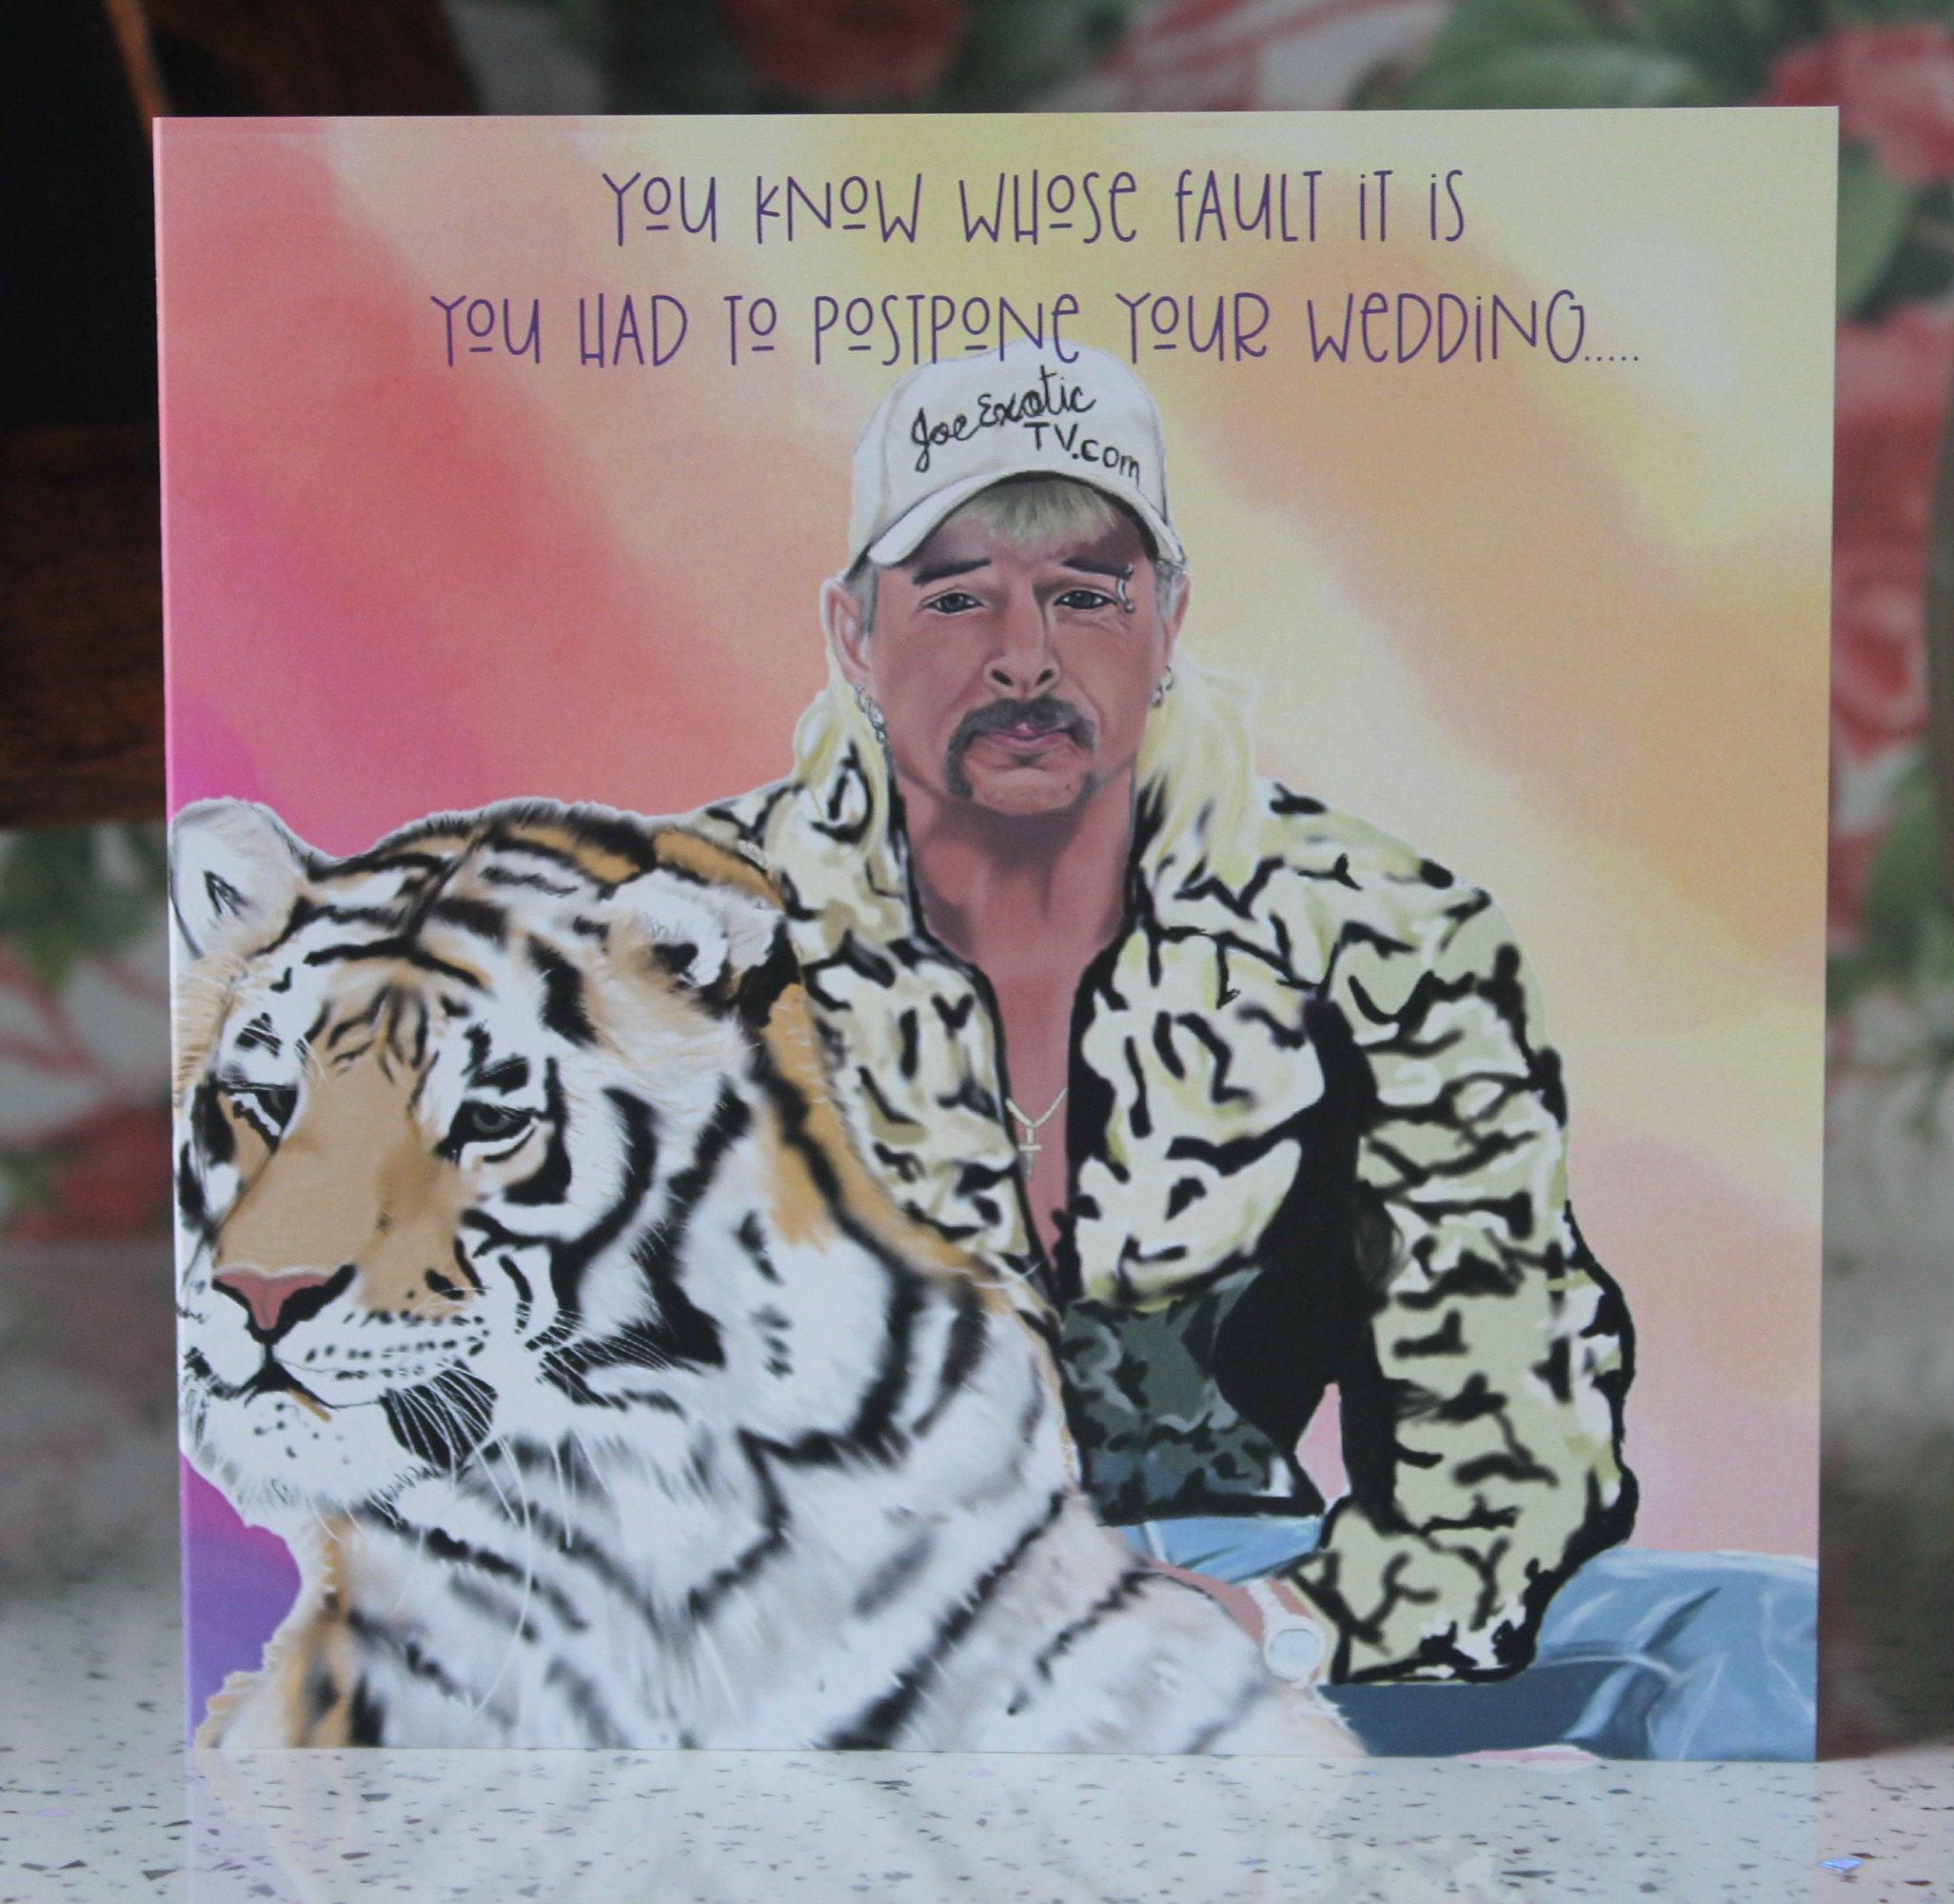 Tiger King  postponed Wedding Day Card - Joe exotic - Would Be Wedding Day Card - Original Wedding Day Card - Lockdown Card - Wife to be